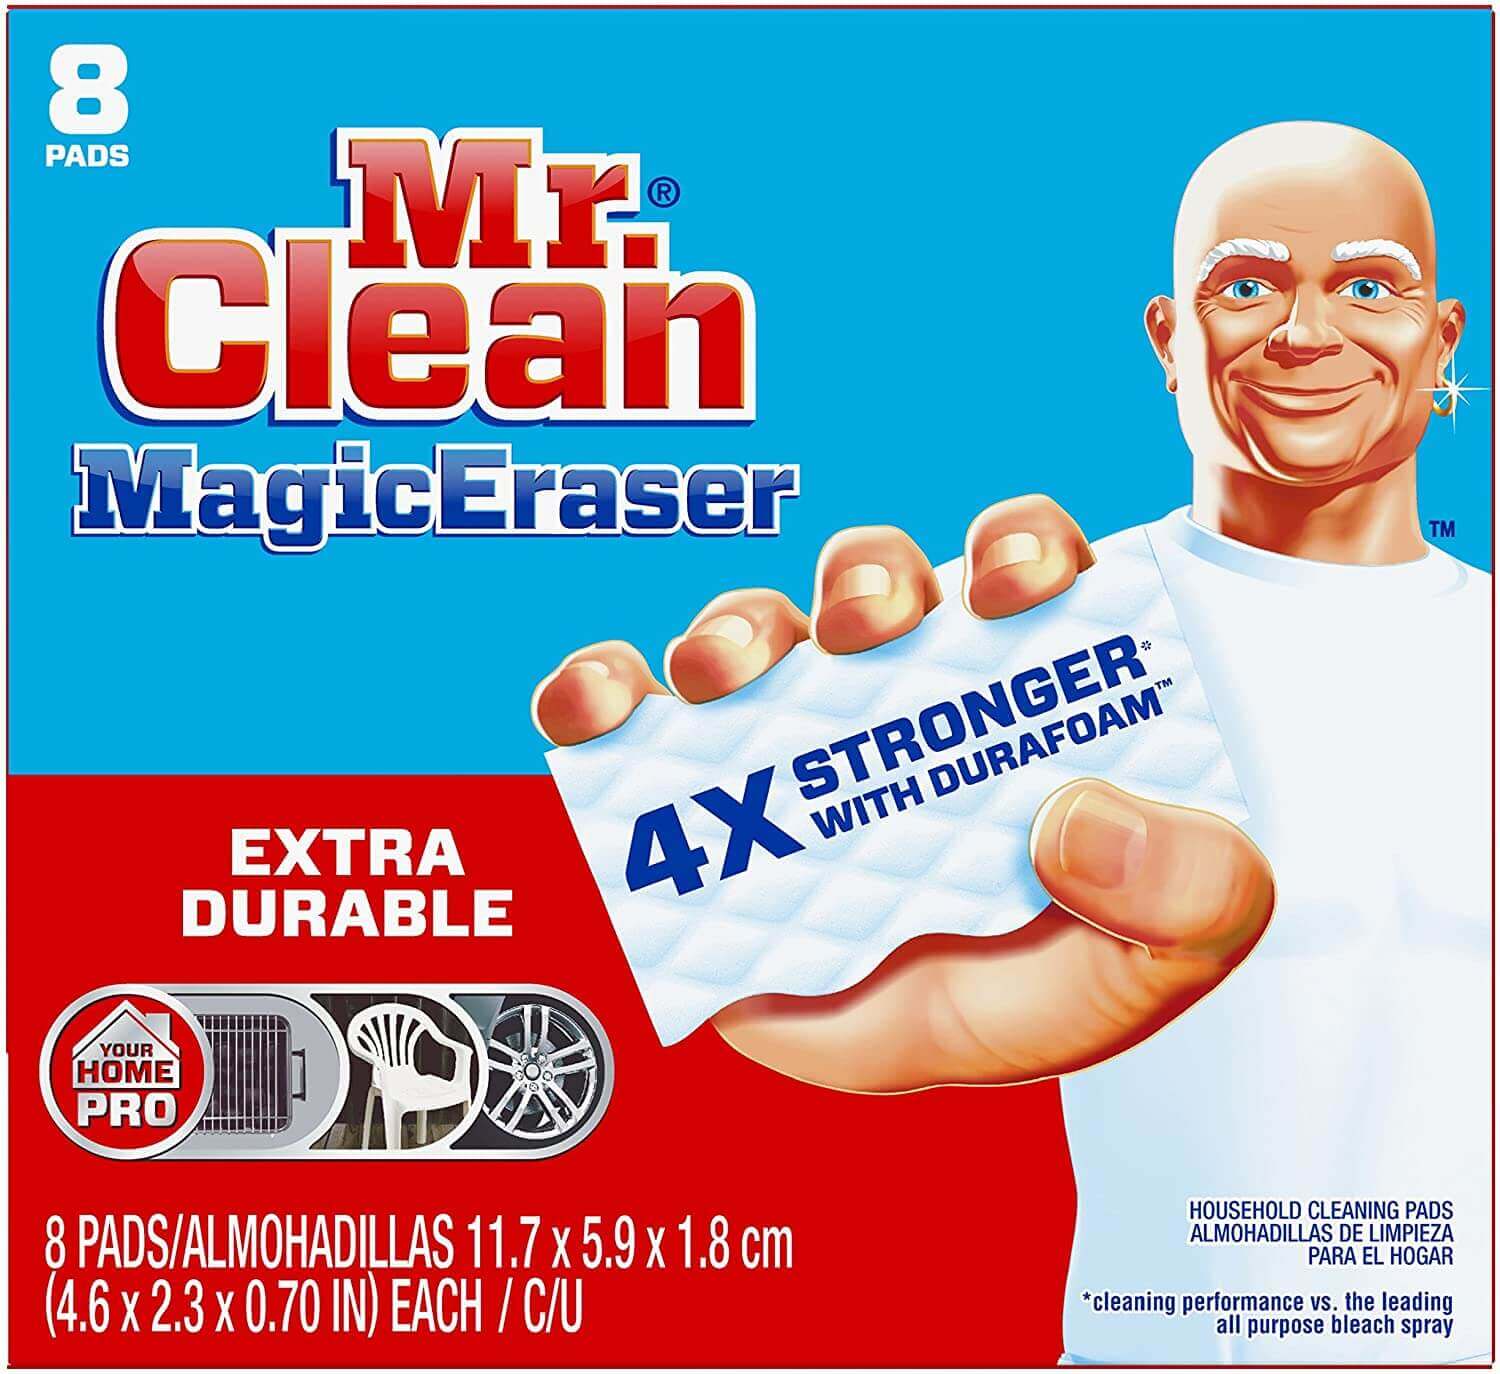 Mr. clean magic eraser